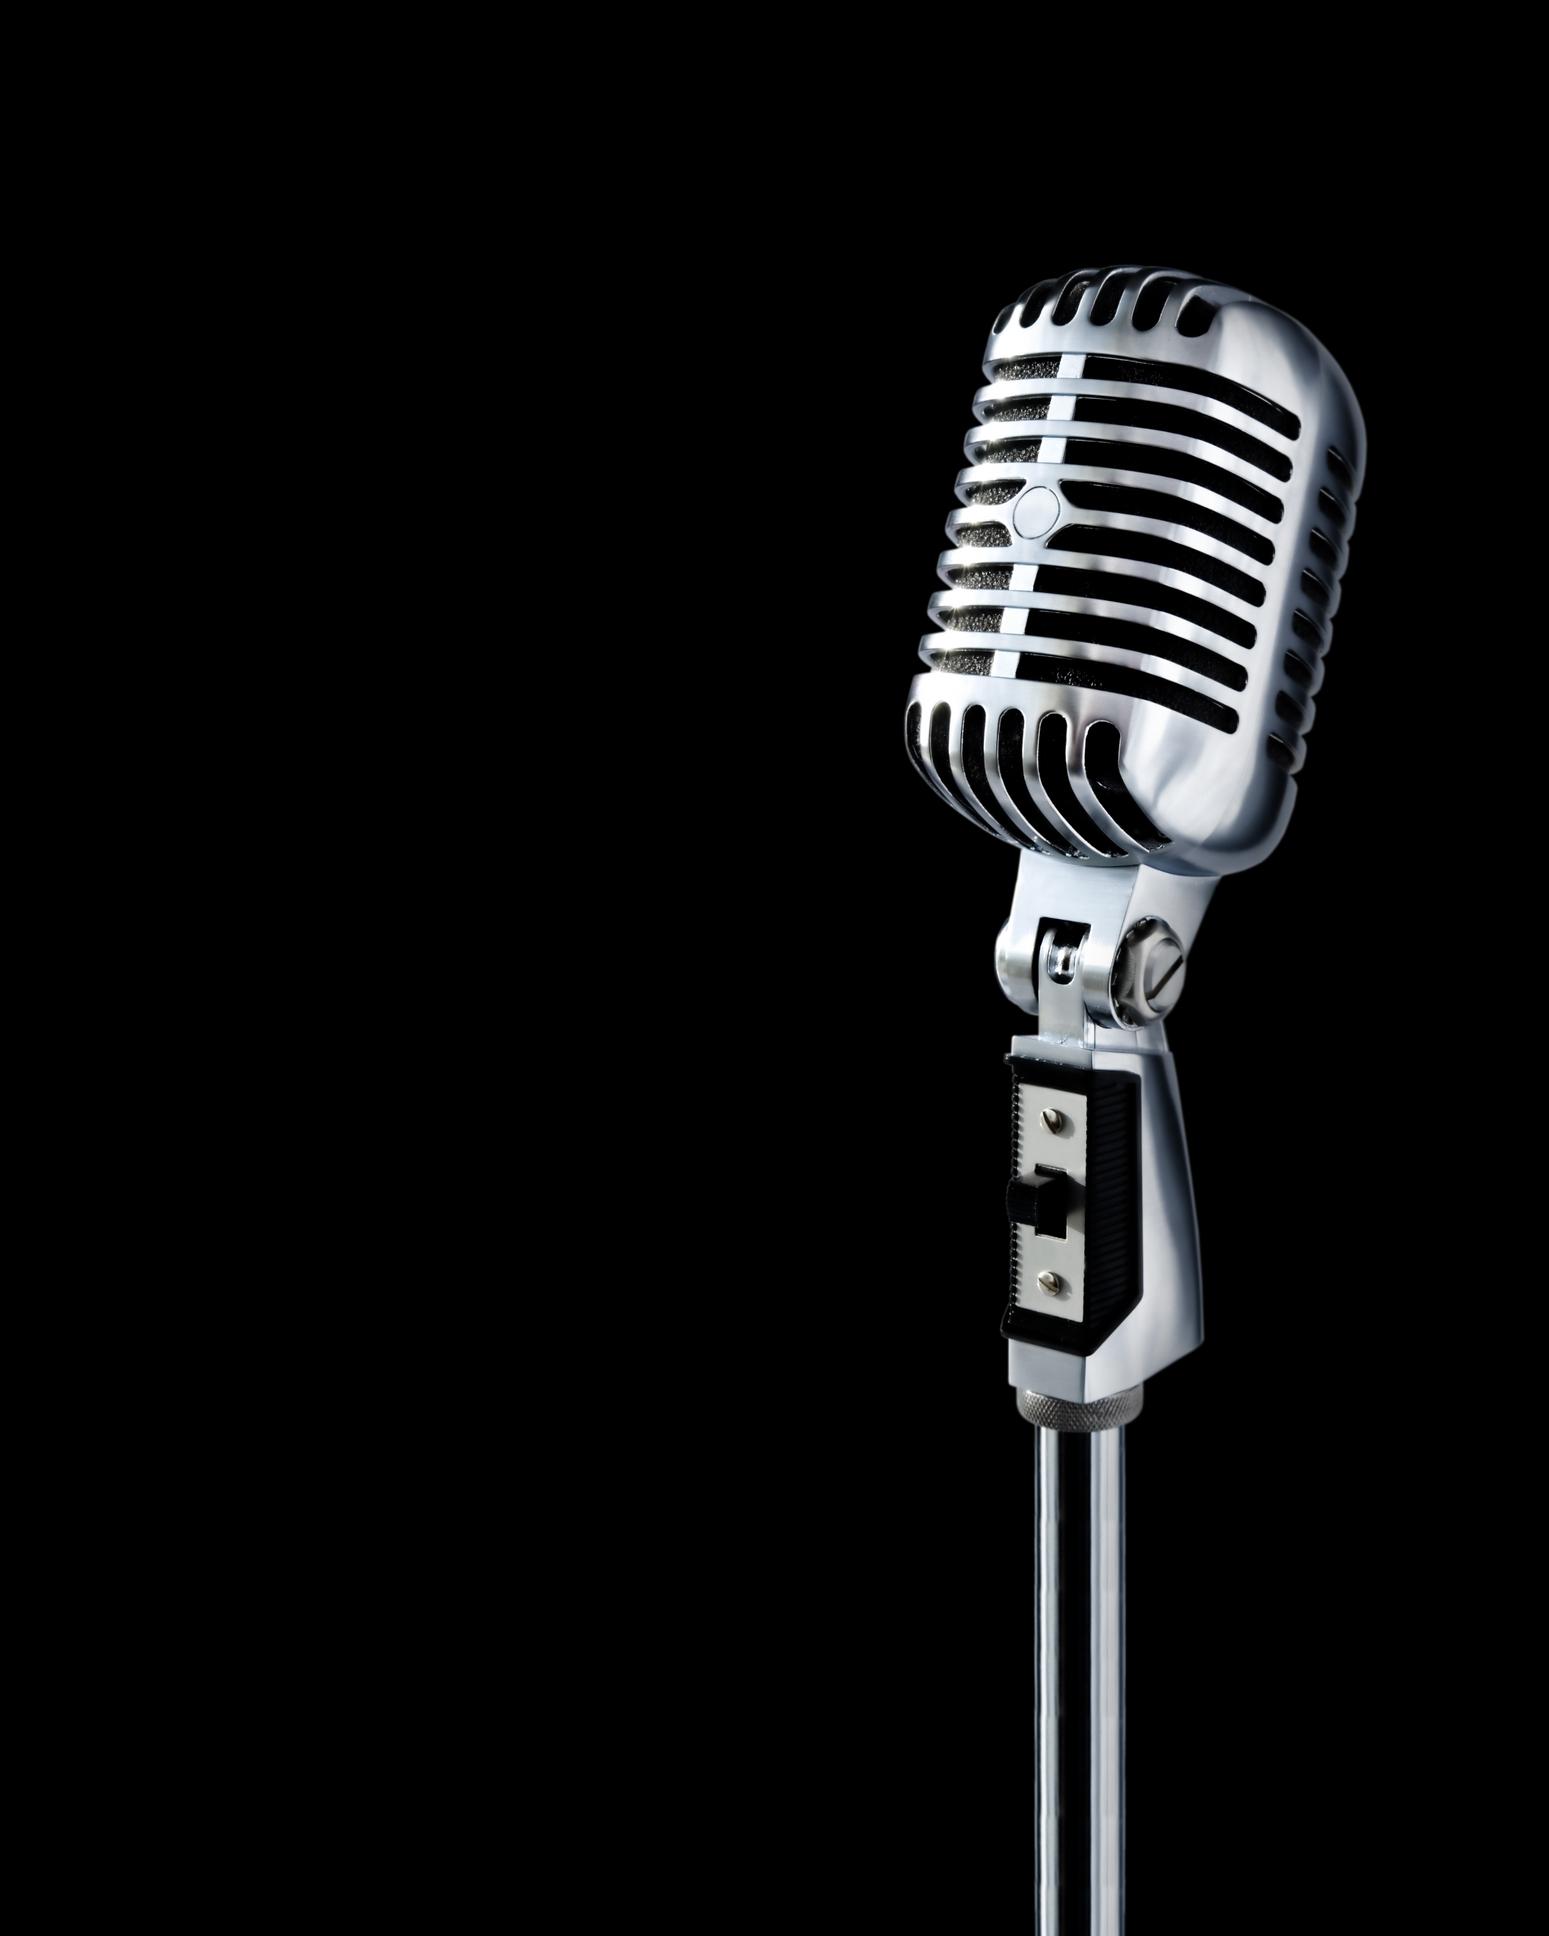 Microphone Wallpaper. Retro Microphone